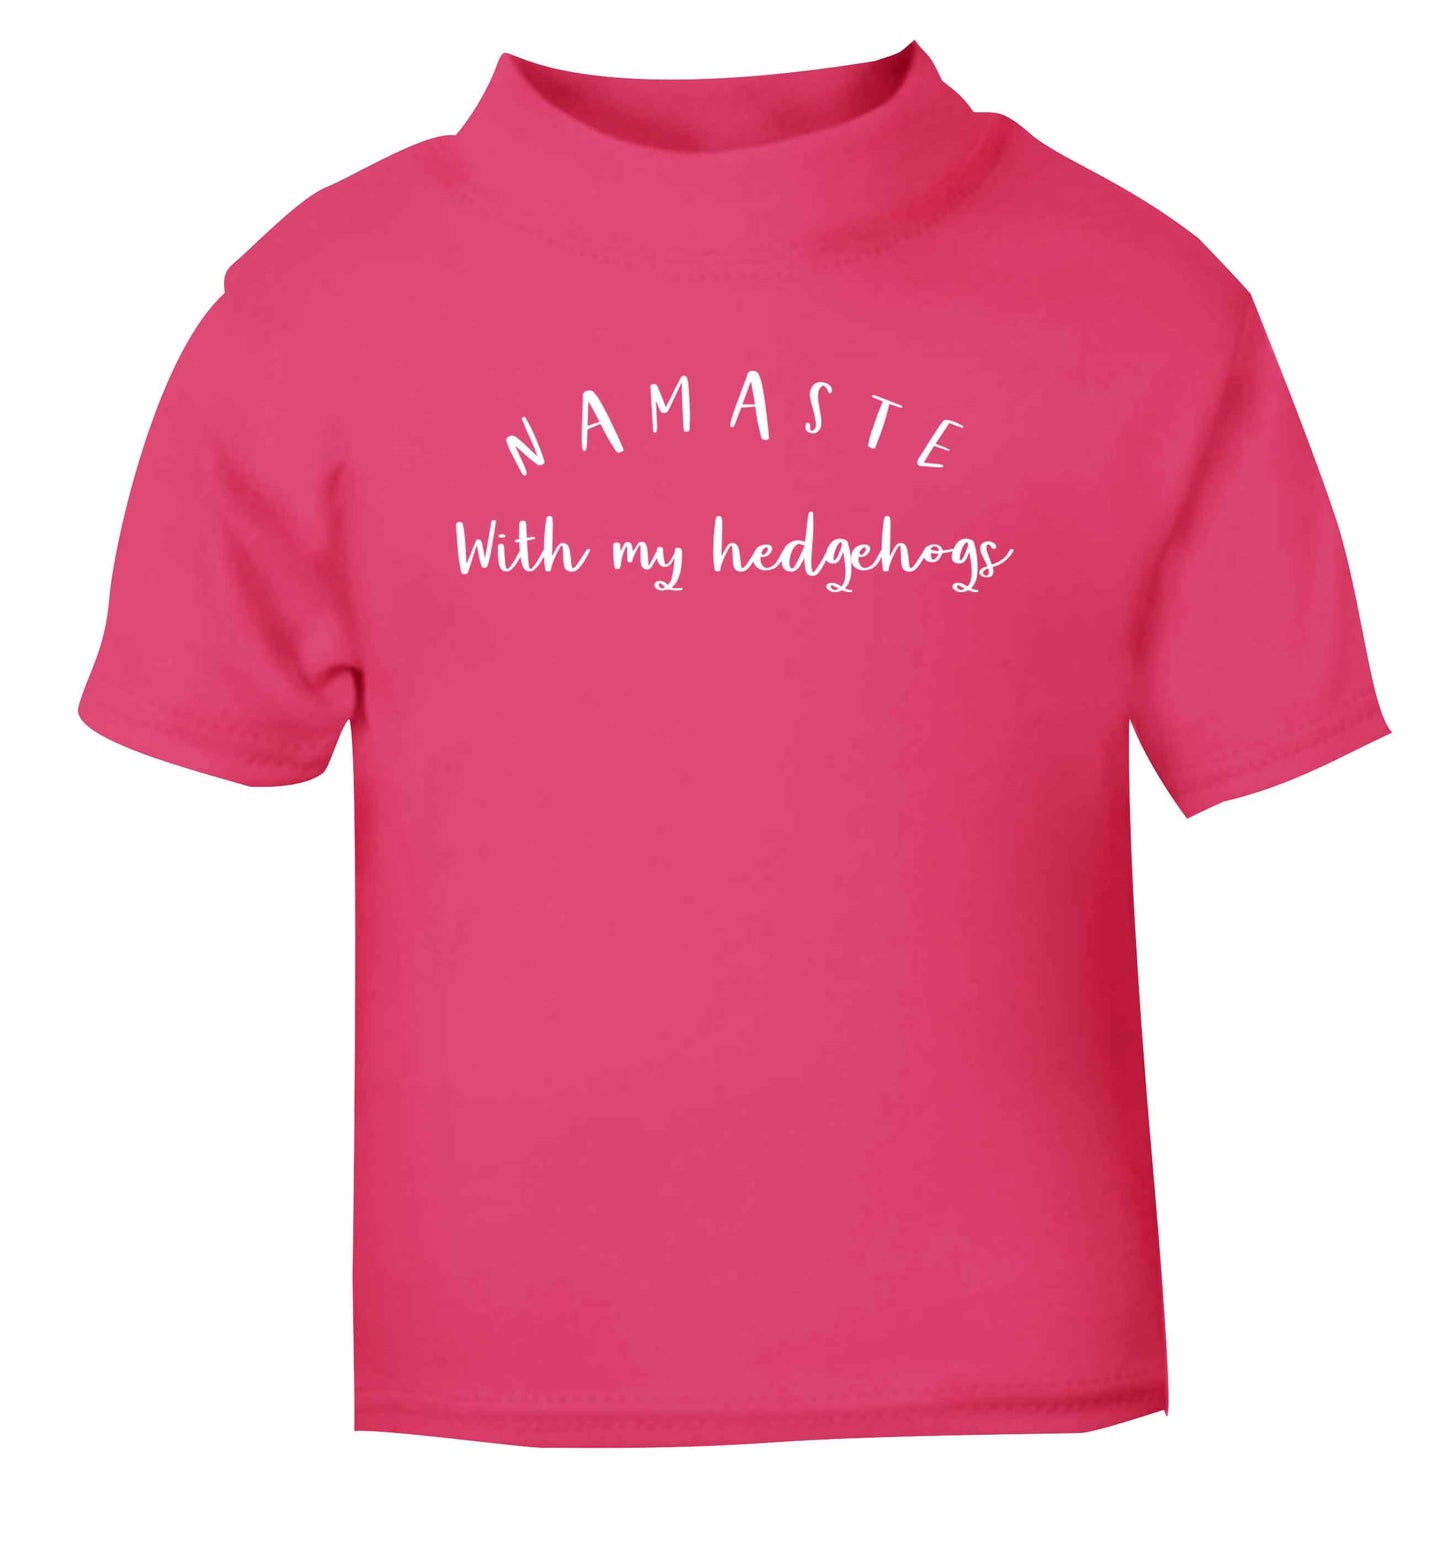 Namaste with my hedgehog pink Baby Toddler Tshirt 2 Years